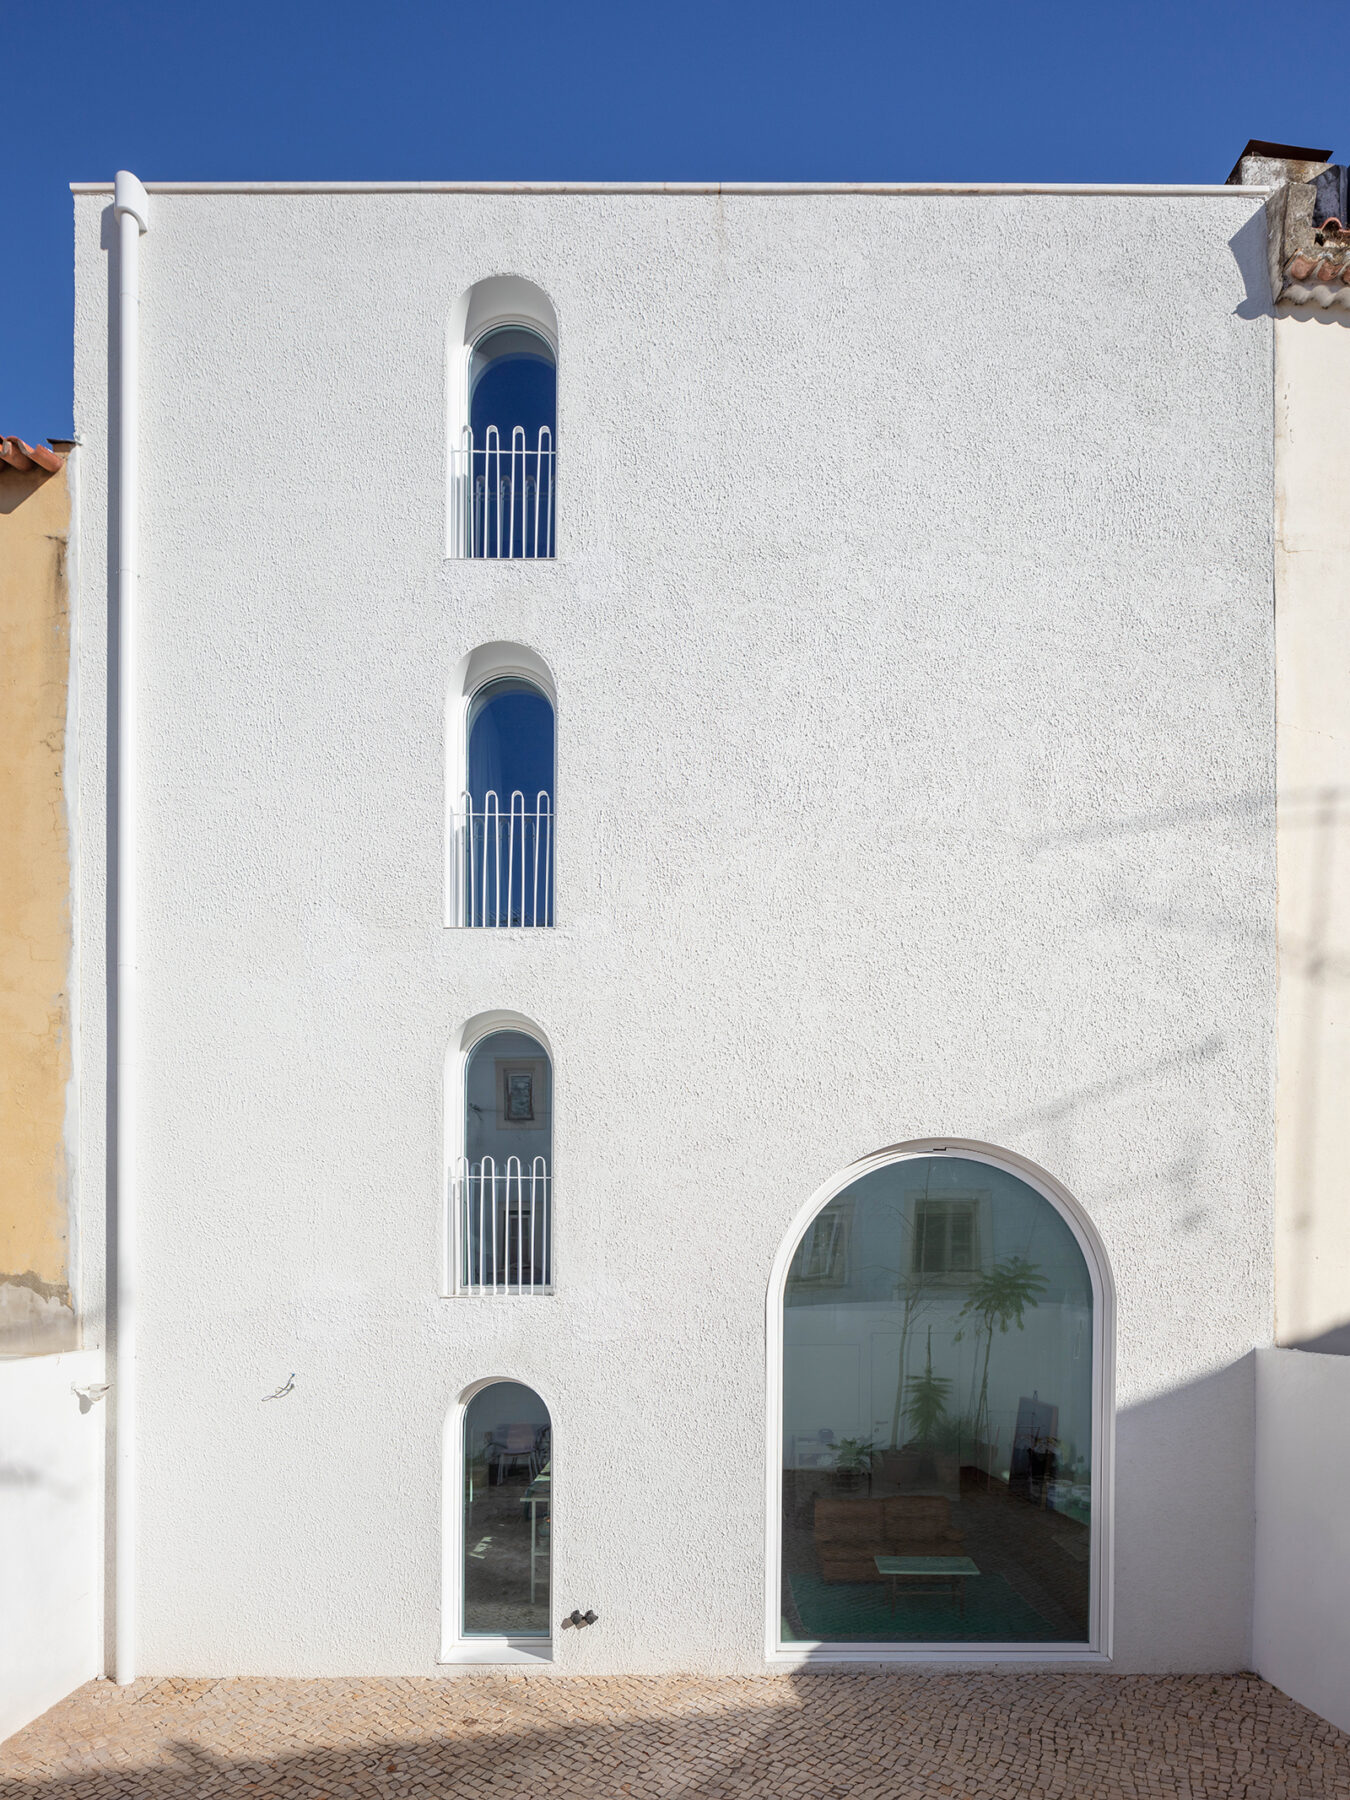 Archisearch Dodged House in Lisbon, Portugal | Daniel Zamarbide with Leopold Banchini